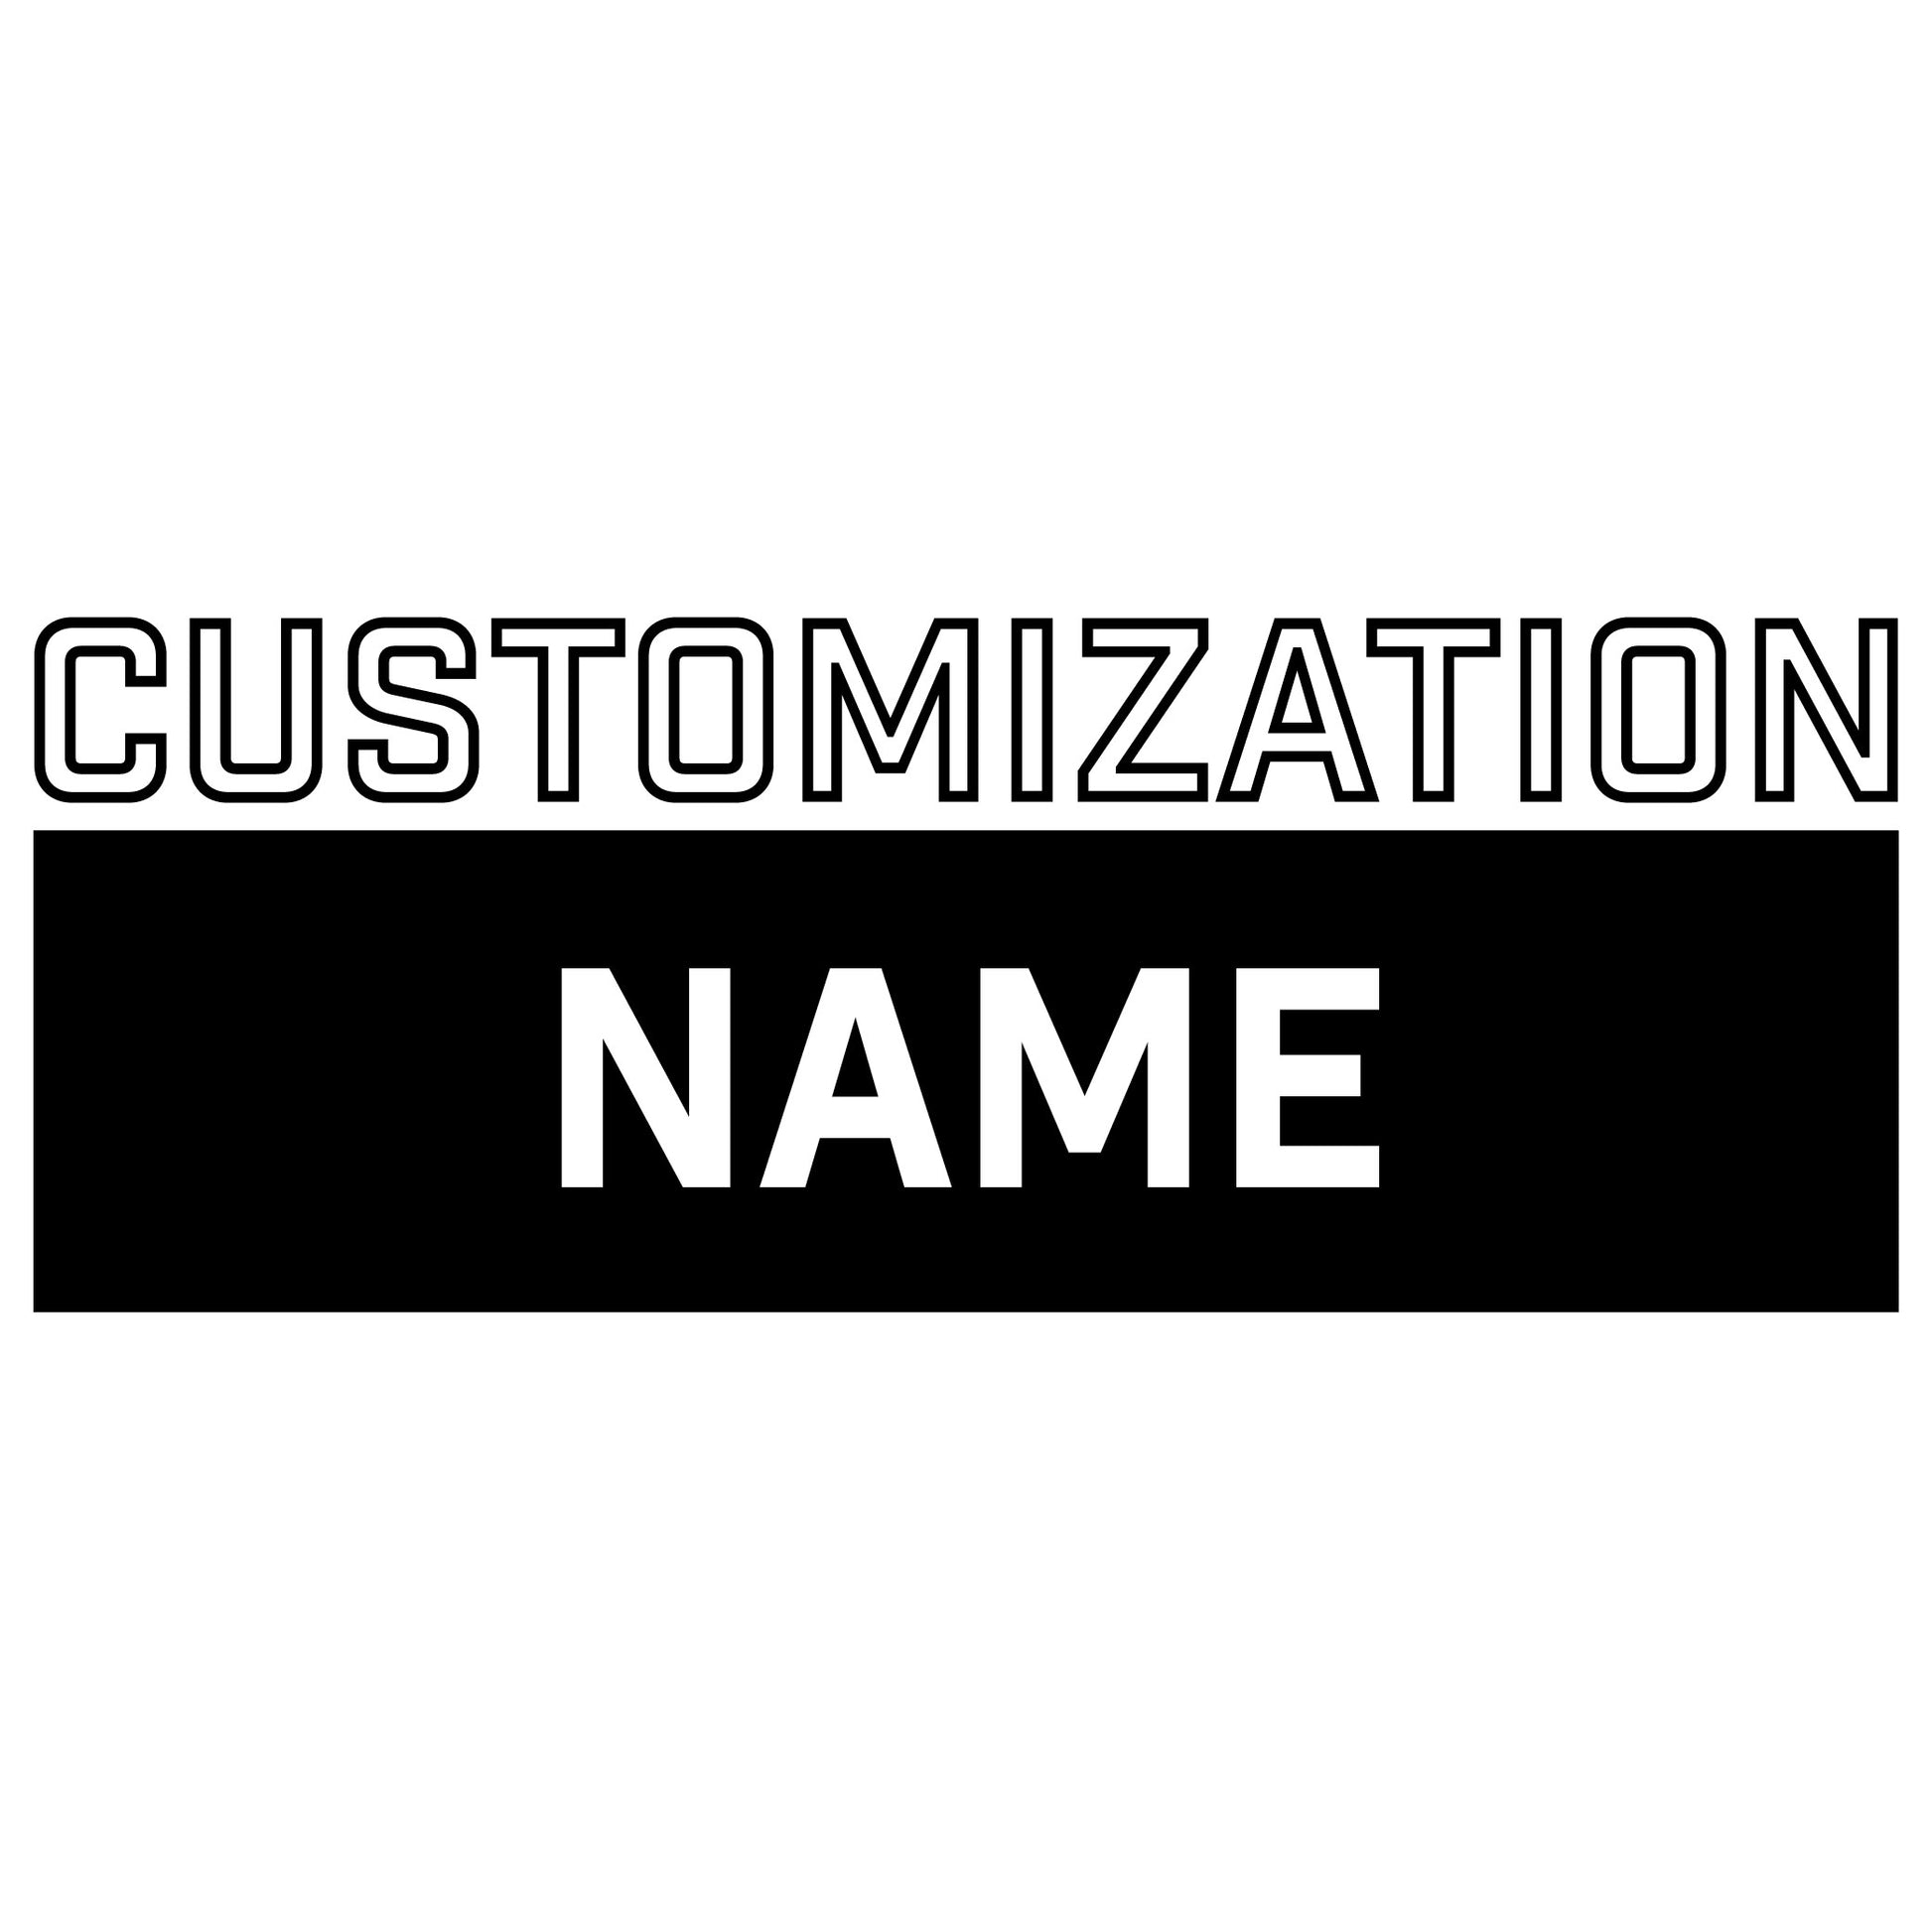 Name Customization